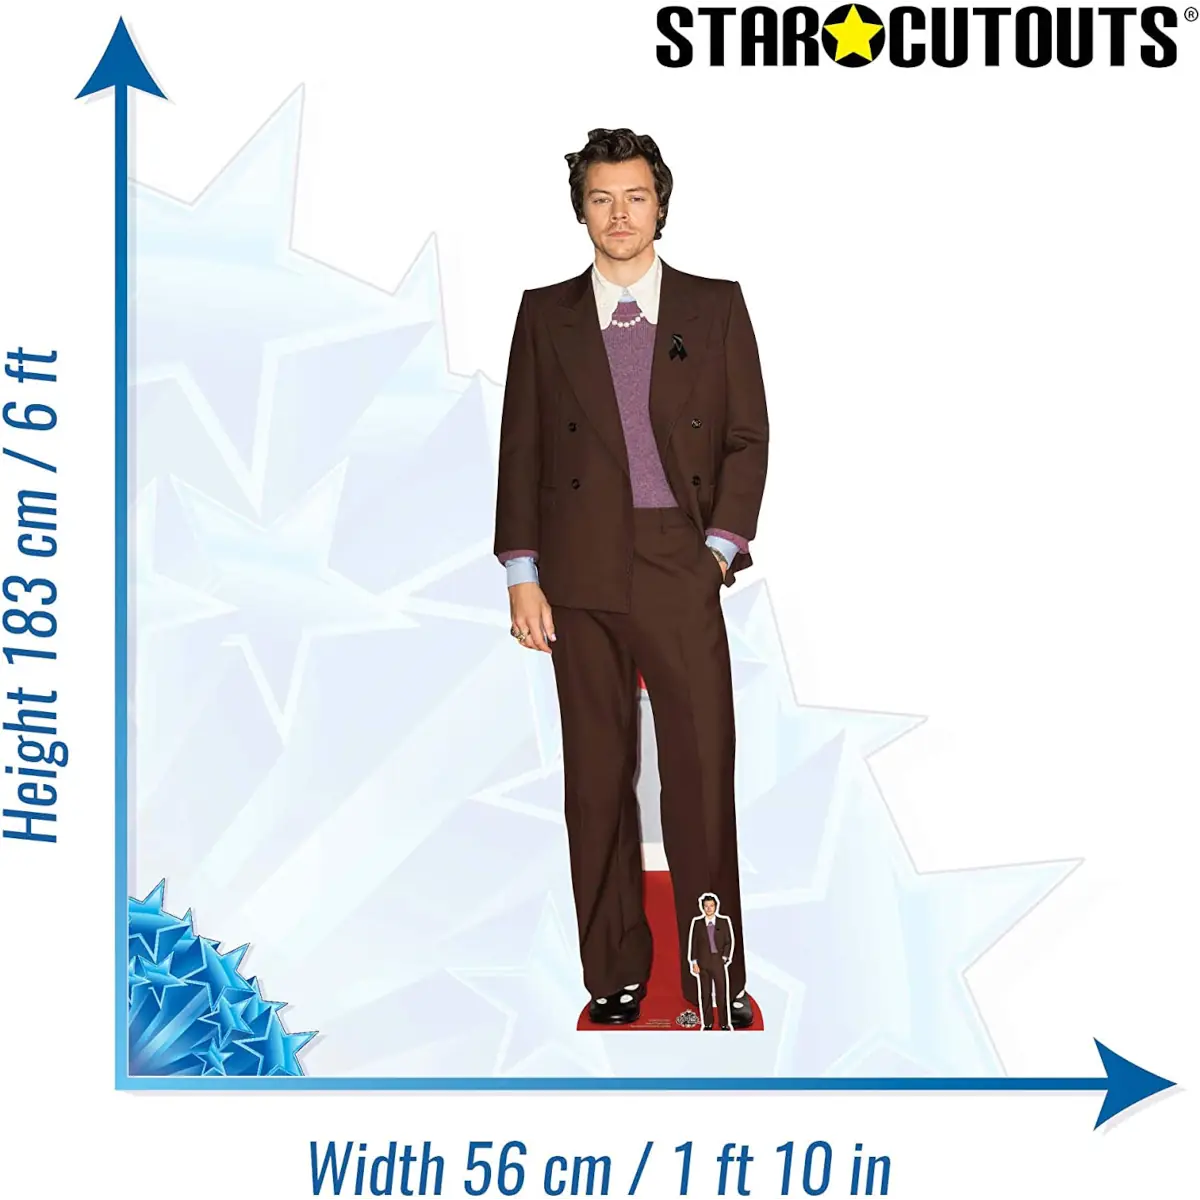 CS836 Harry Styles English Singer Songwriter Lifesize Mini Cardboard Cutout Standee 2